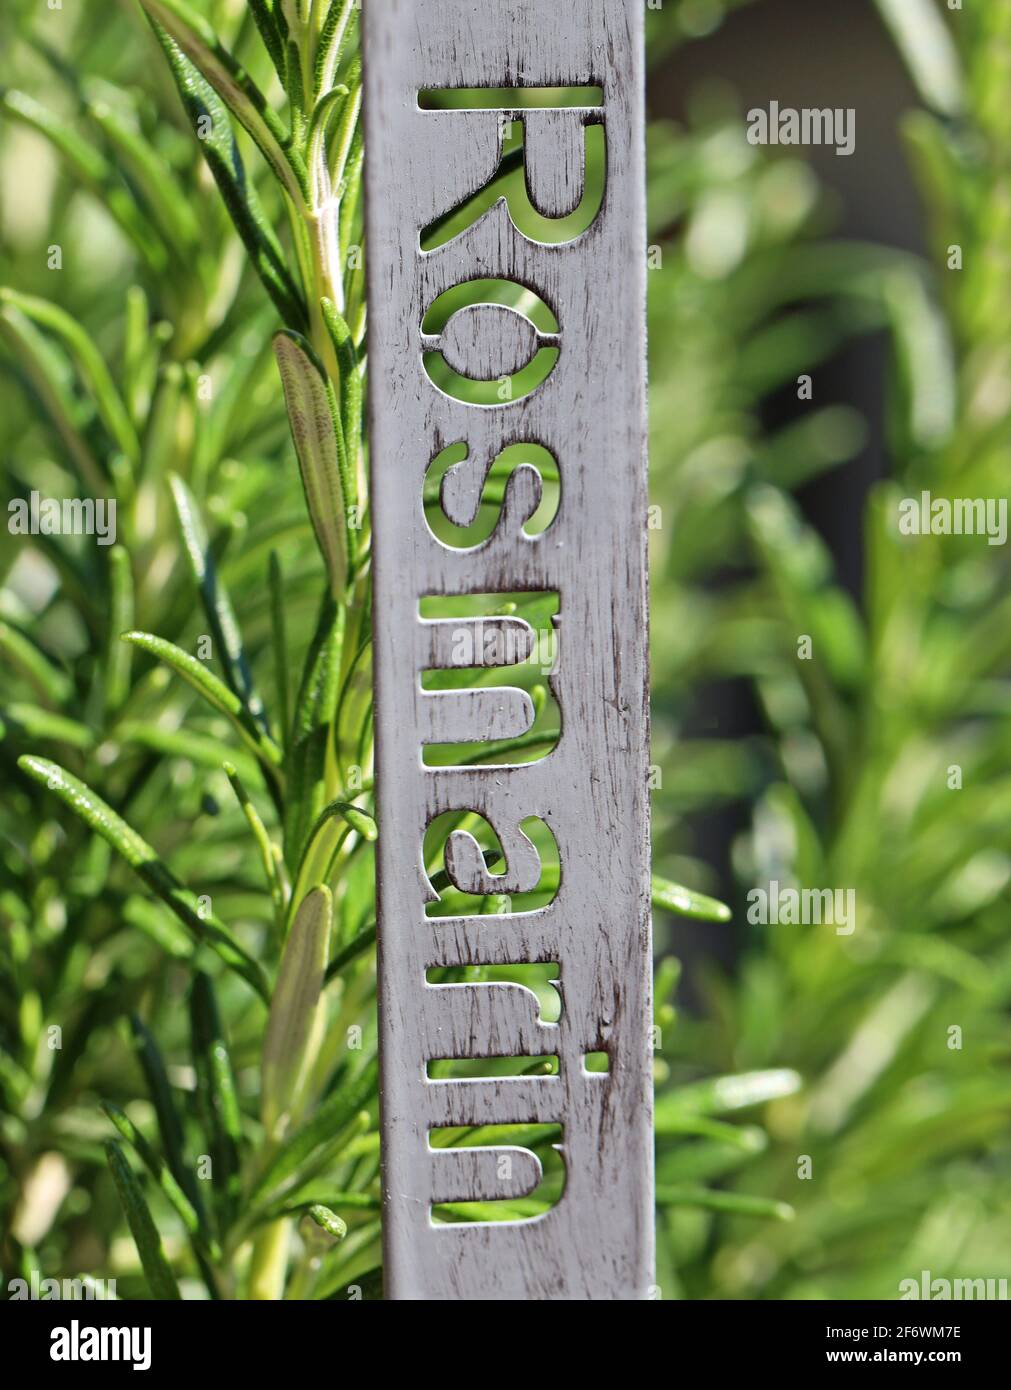 Rosemary vertical word in German, Rosmarin, on metal sign, fresh mediterranean plant in herb garden Stock Photo